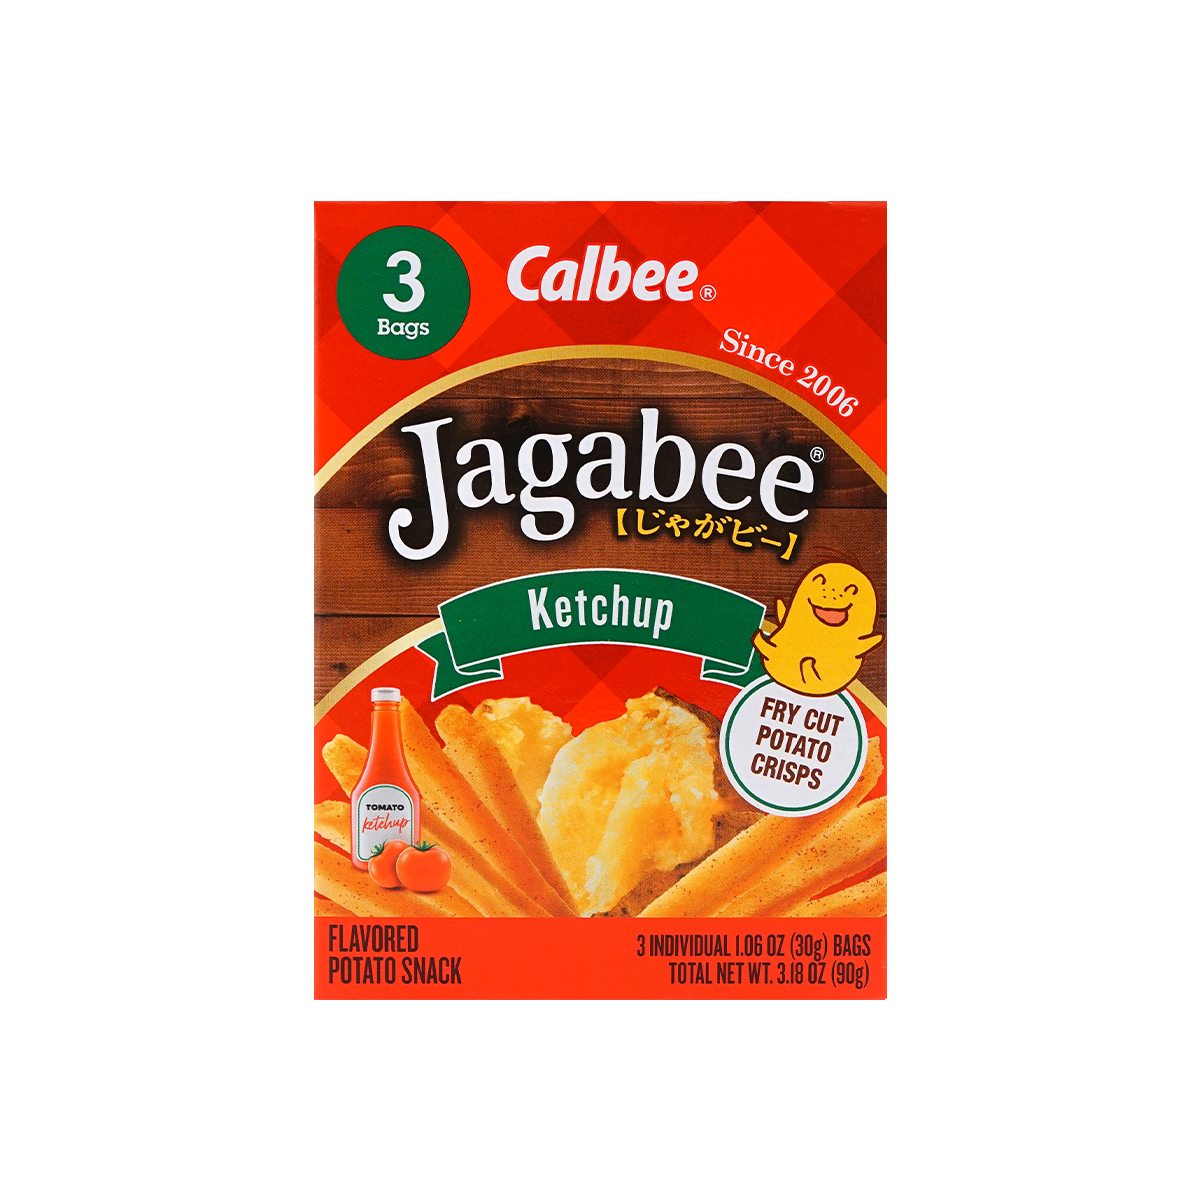 Calbee Jagabee Ketchup Flavor